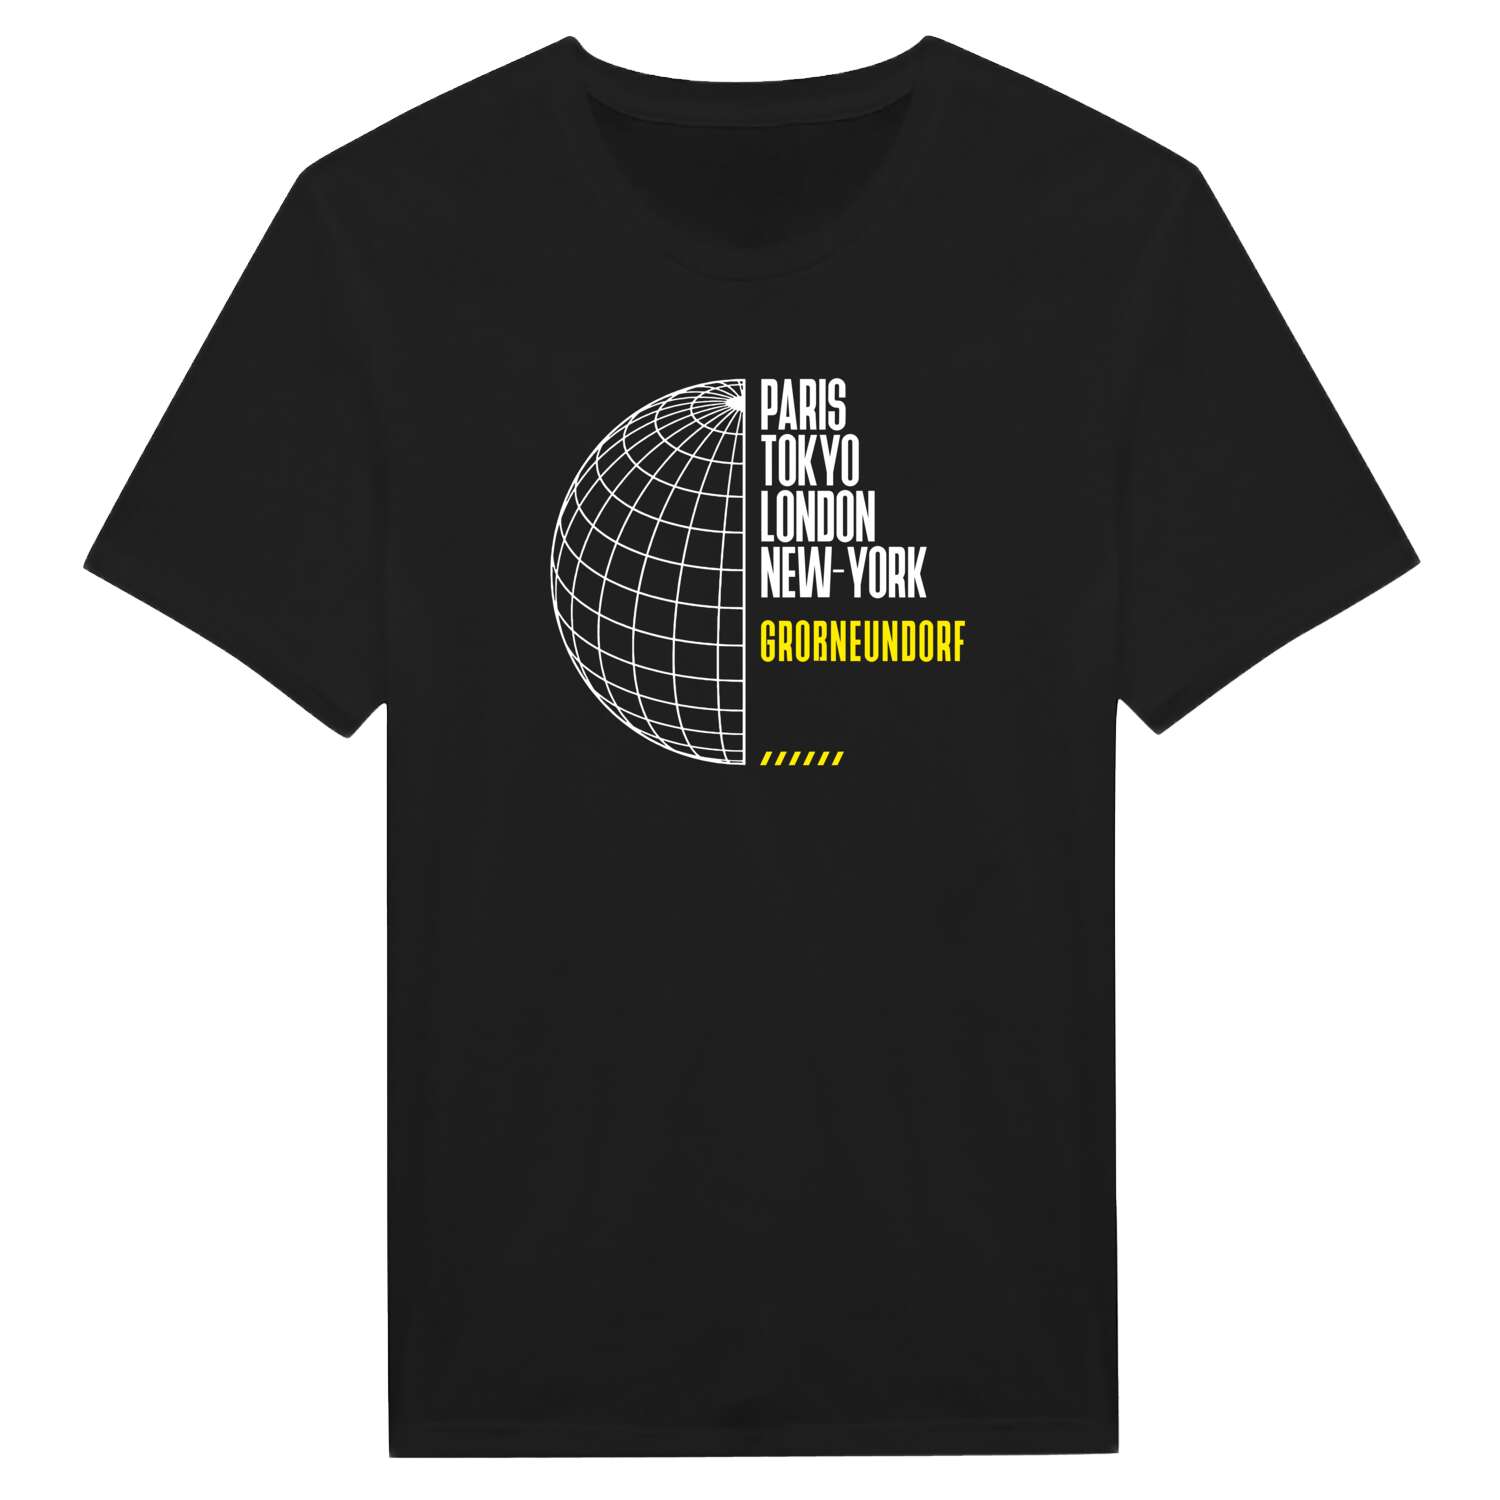 Großneundorf T-Shirt »Paris Tokyo London«